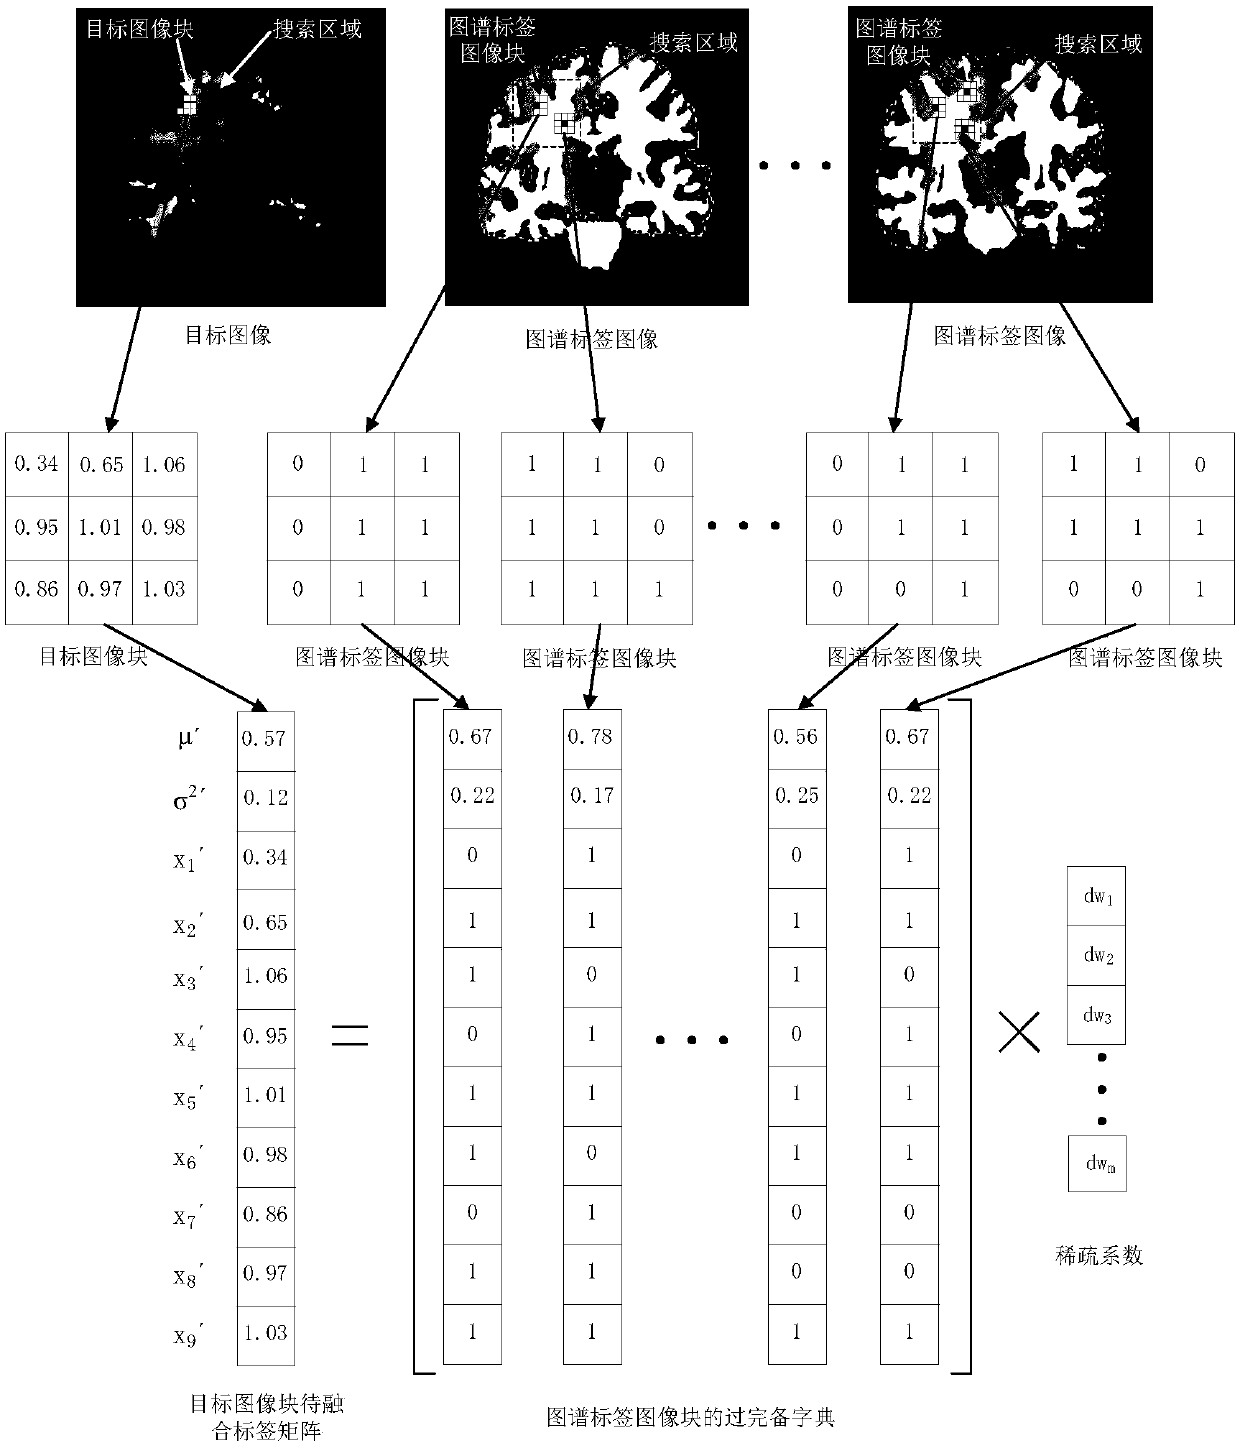 An automatic medical image segmentation method based on multi-atlas label fusion